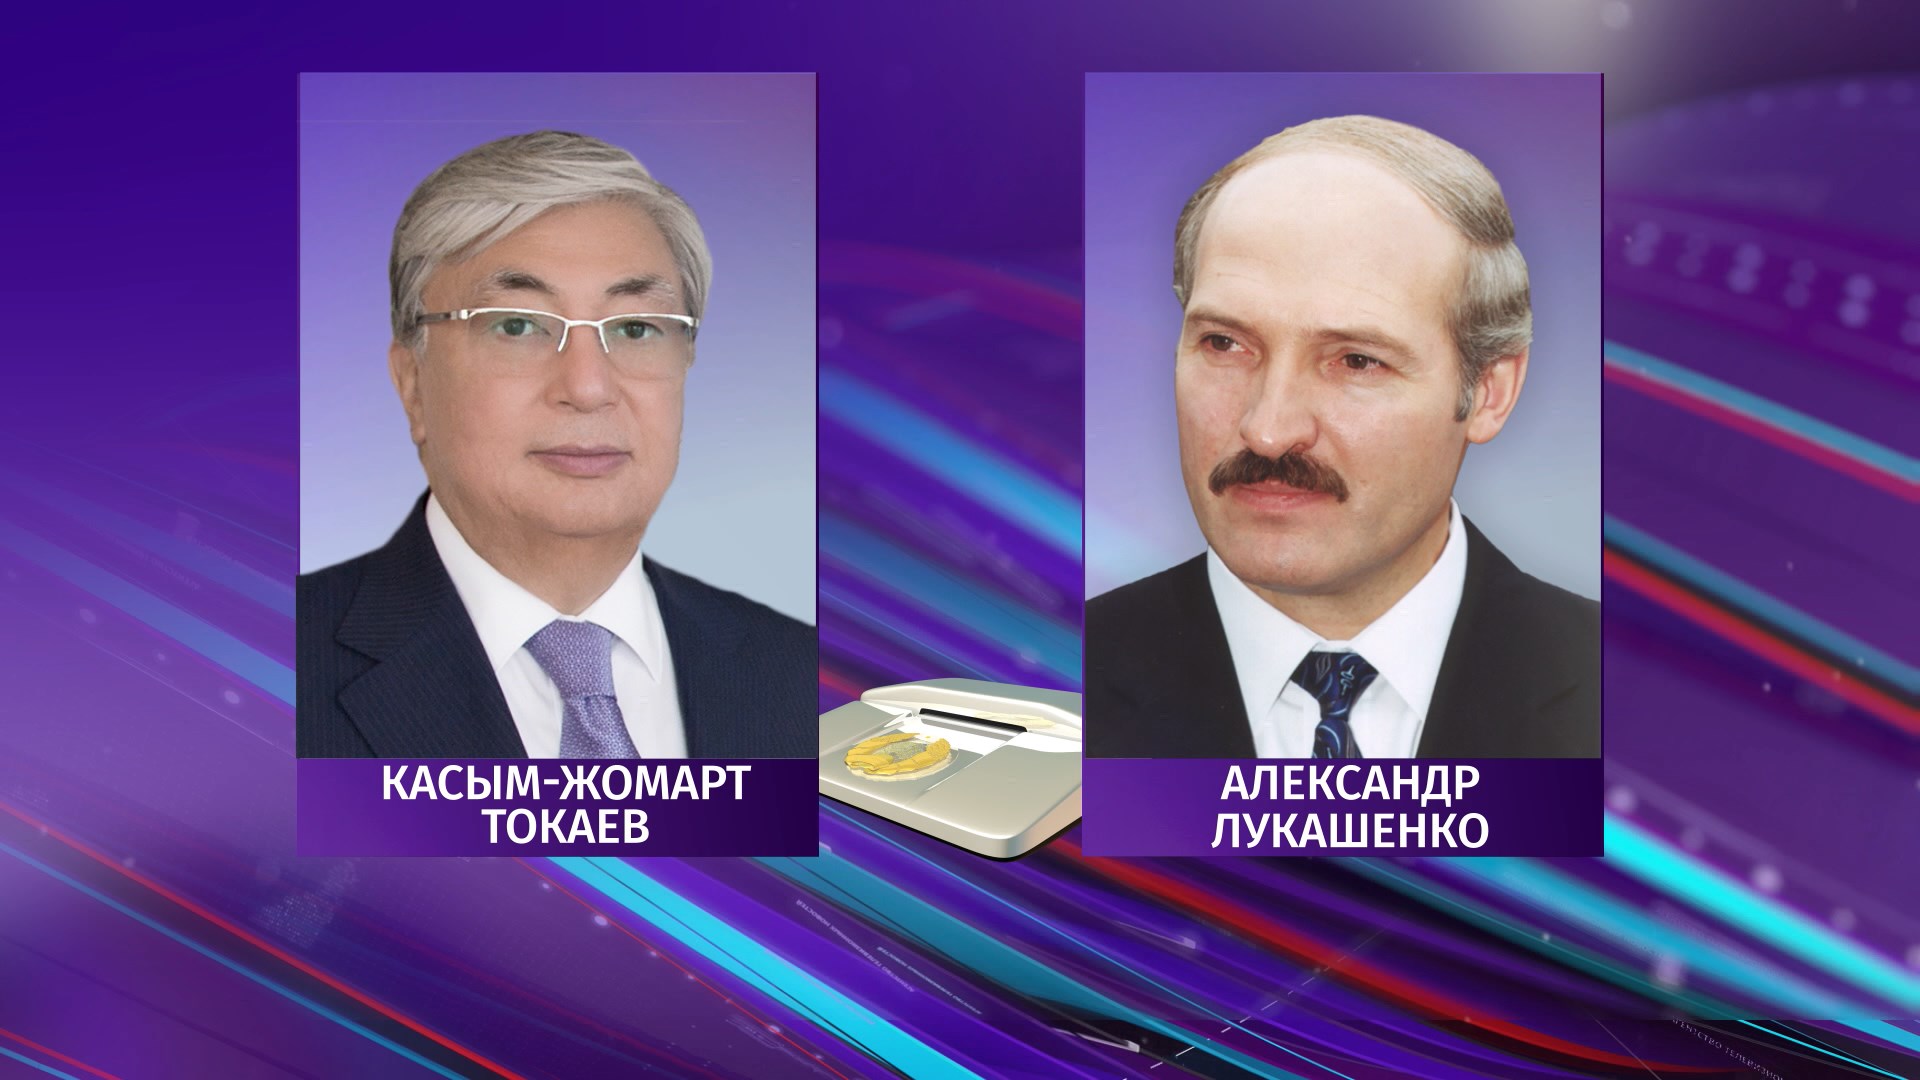 Alexander Lukashenko, Kassym-Jomart Tokayev had a telephone conversation